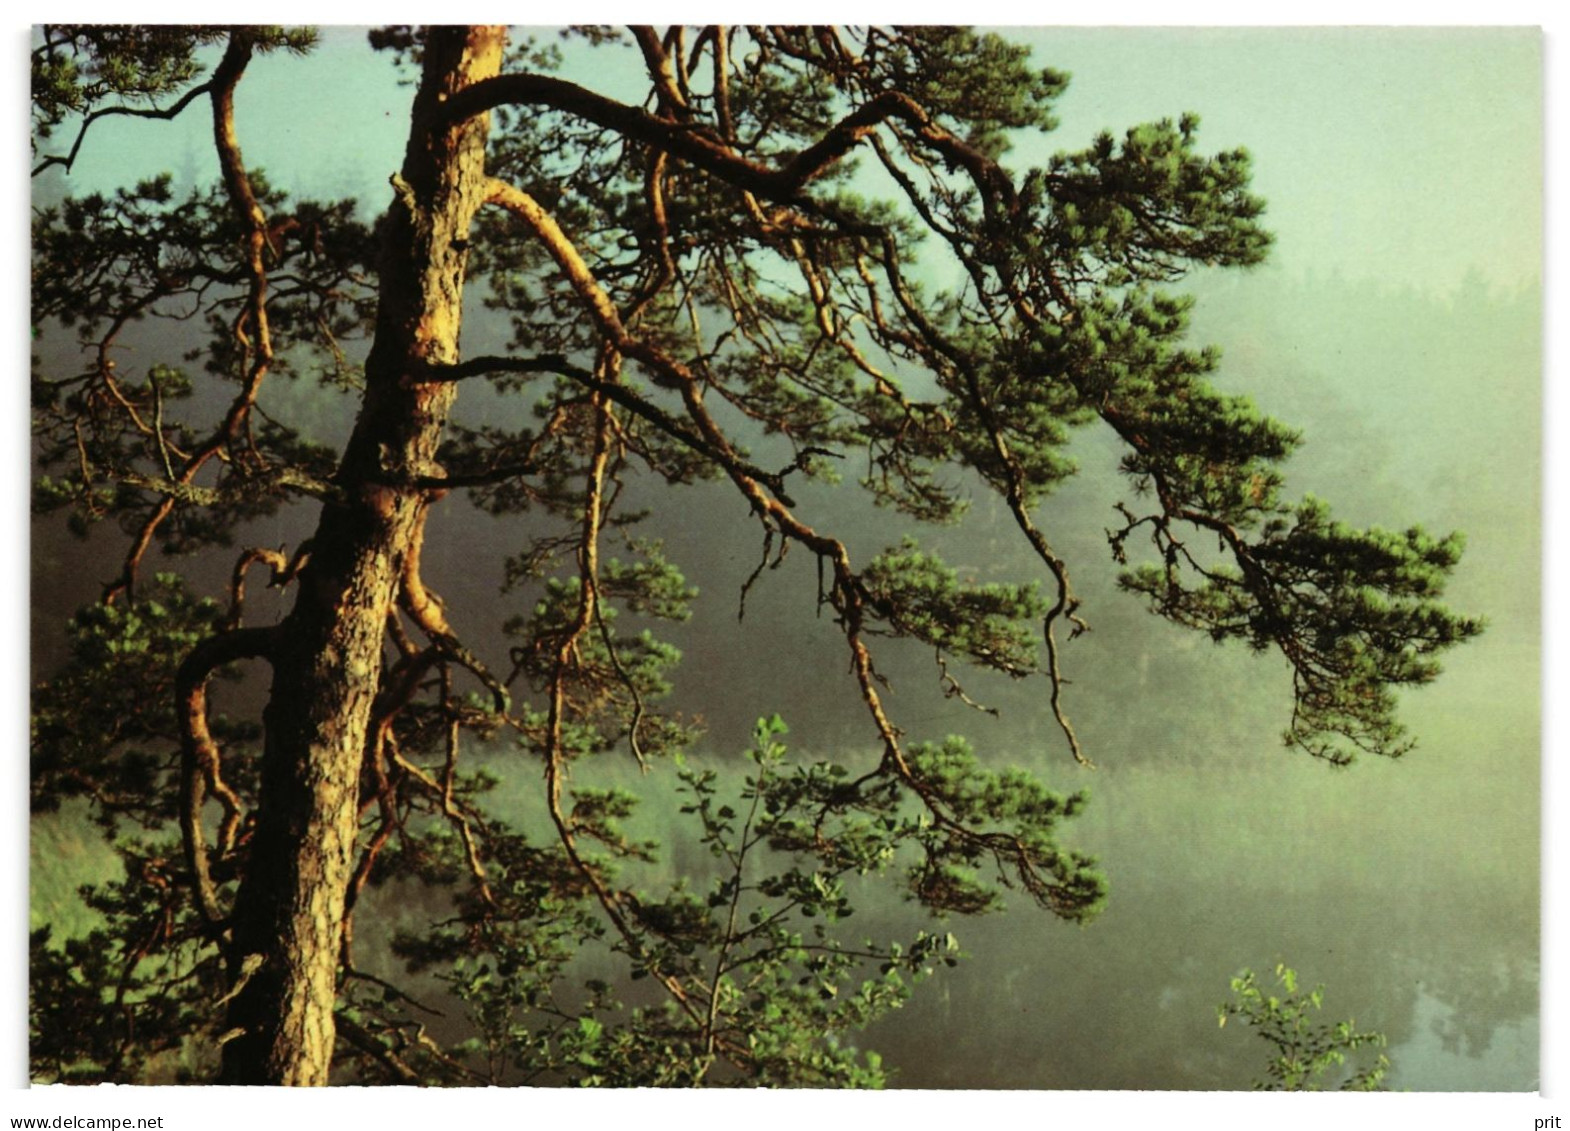 Pine Tree, Finland Finnish WWF Unused Postcard 1980s Publisher World Wide Fund For Nature, Serie Tunnelma 3, M.Rautkari - Neushoorn